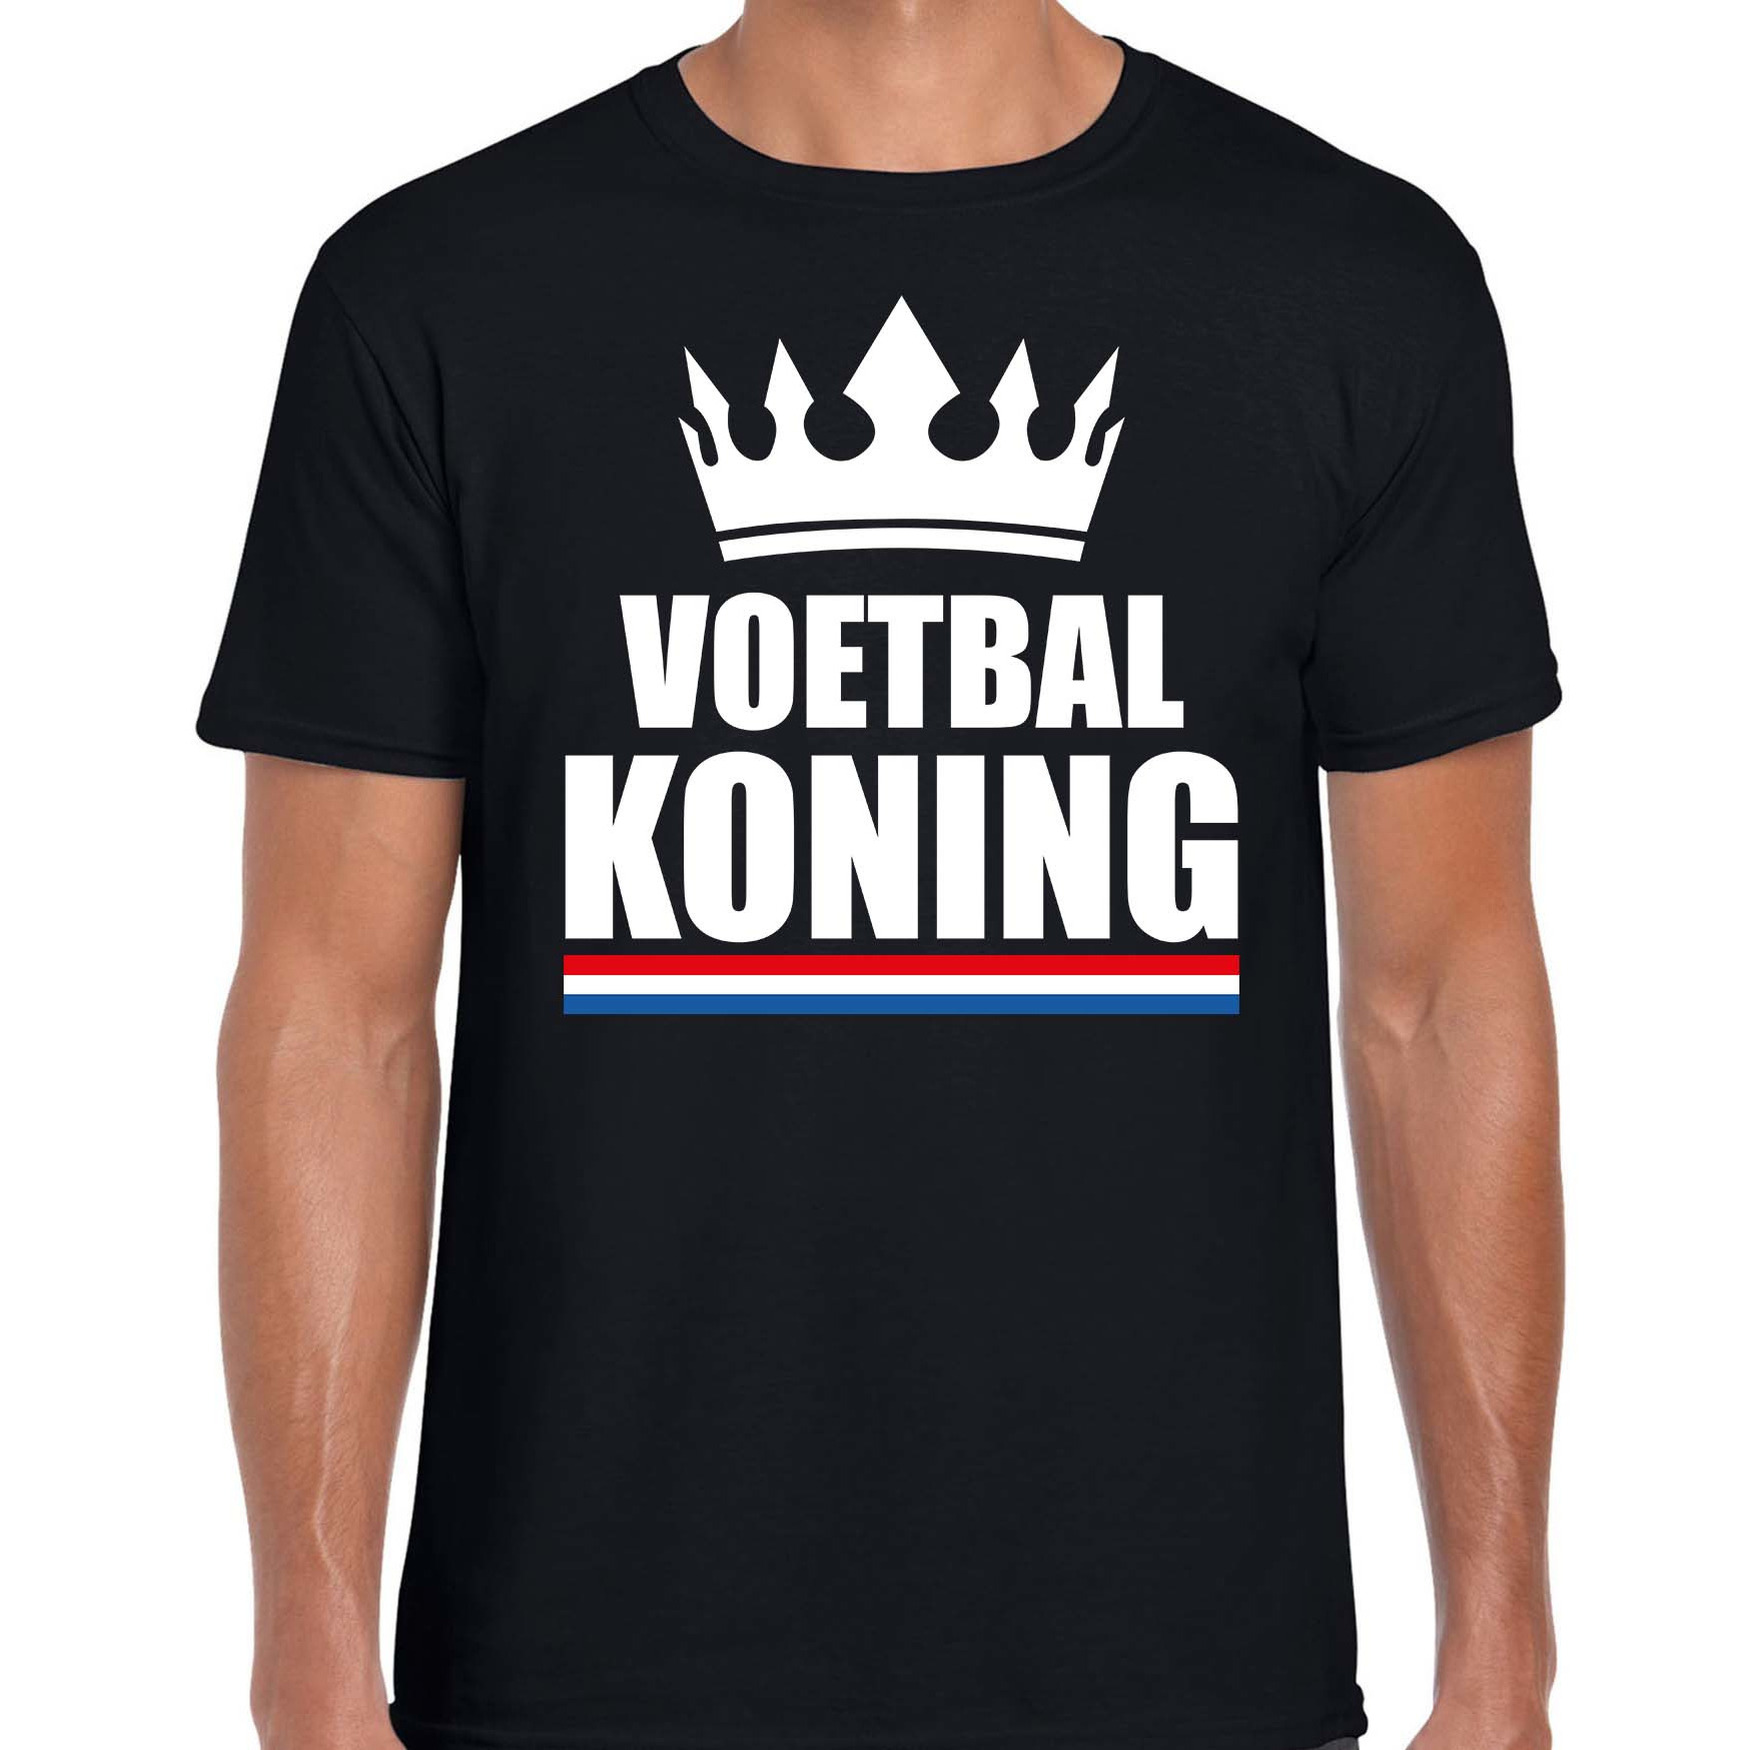 Voetbal koning t-shirt zwart heren Sport-hobby shirts